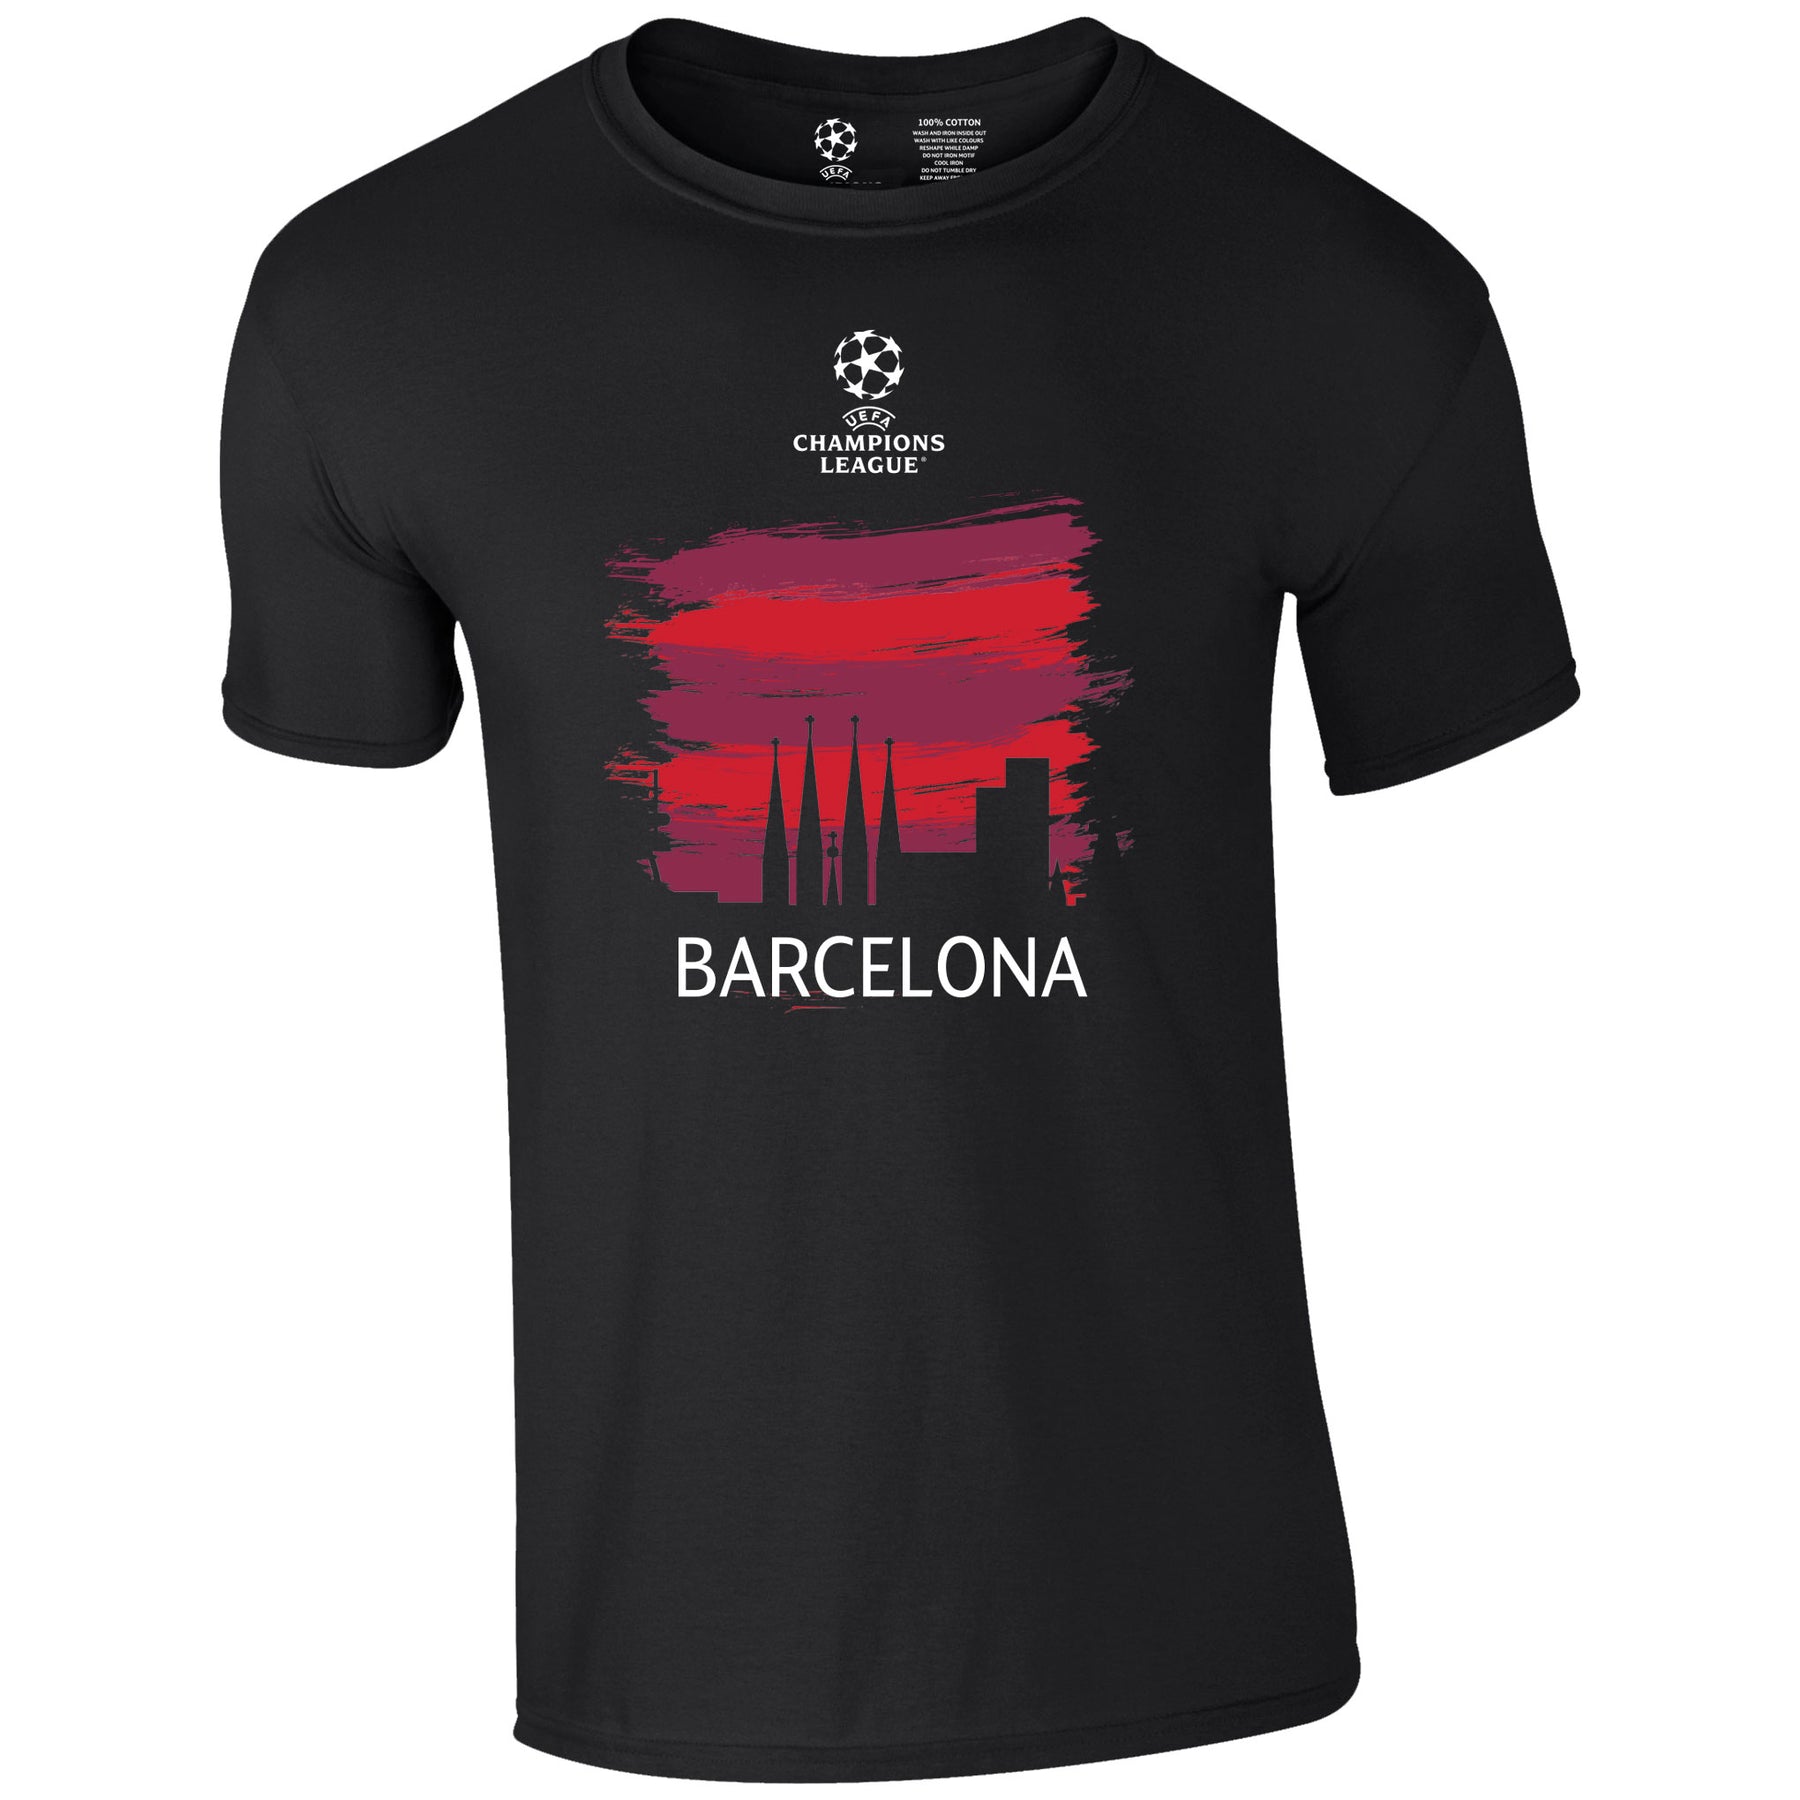 Champions League Barcelona City Painted Skyline T-Shirt Black